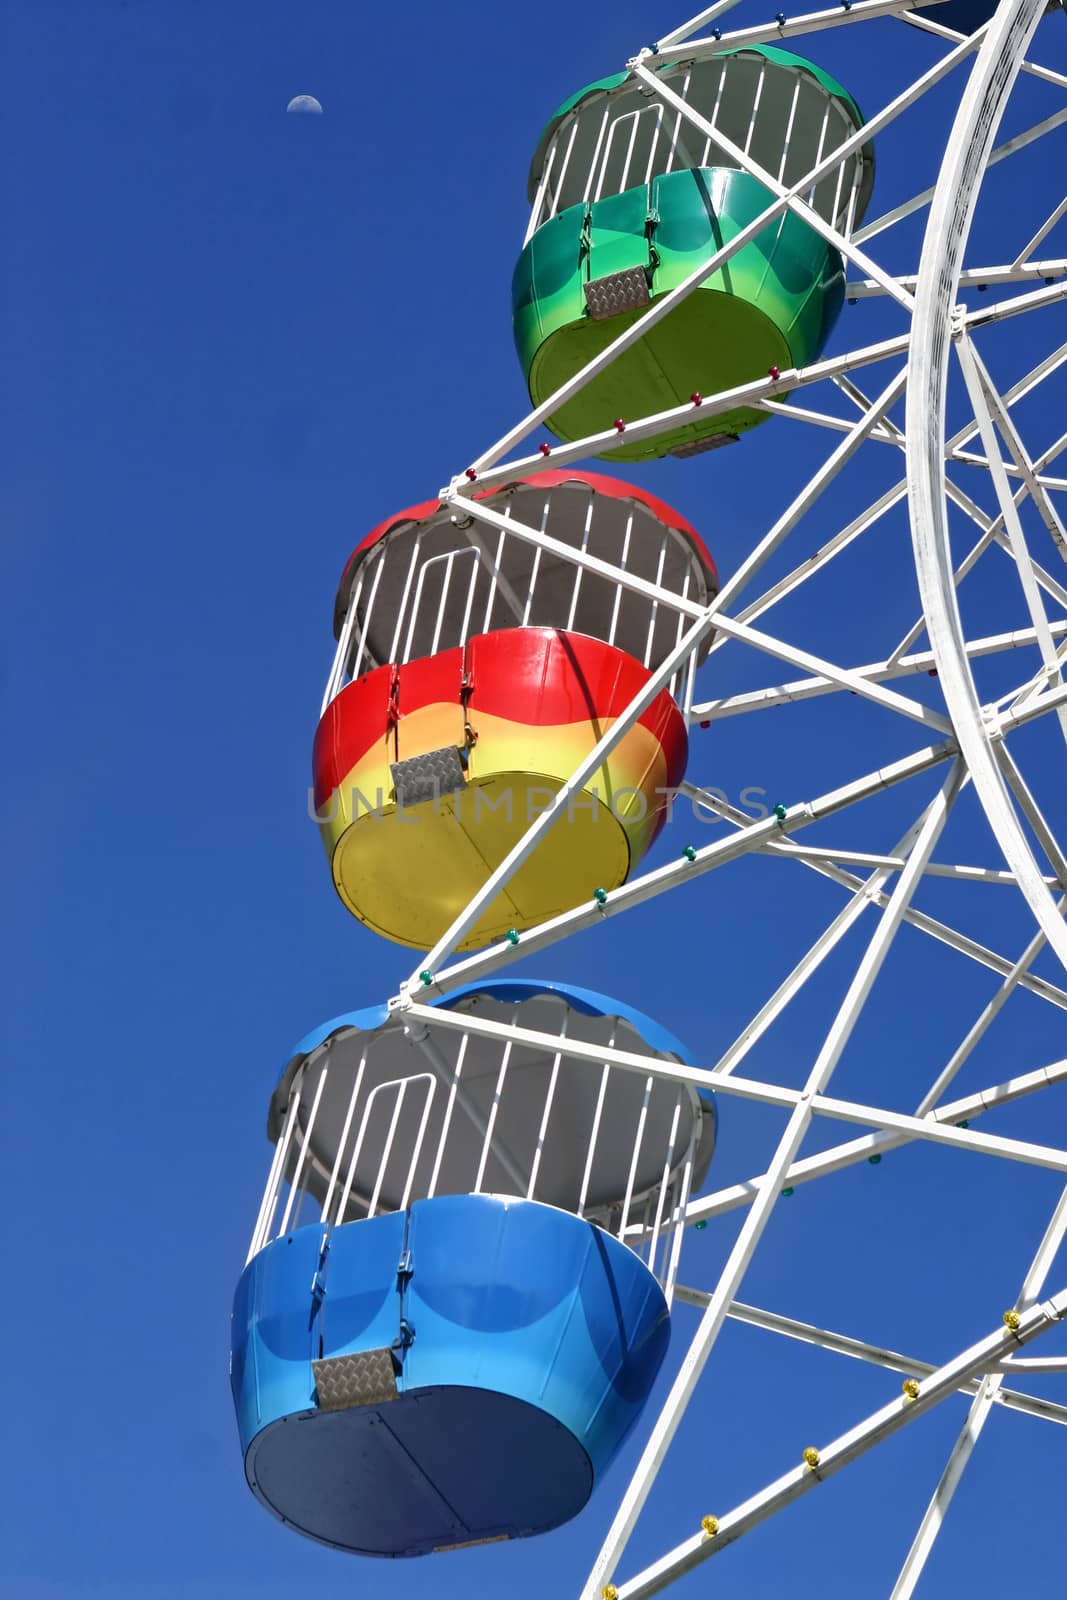 Closeup of Ferris Wheel gondolas against deep blue sky with moon.